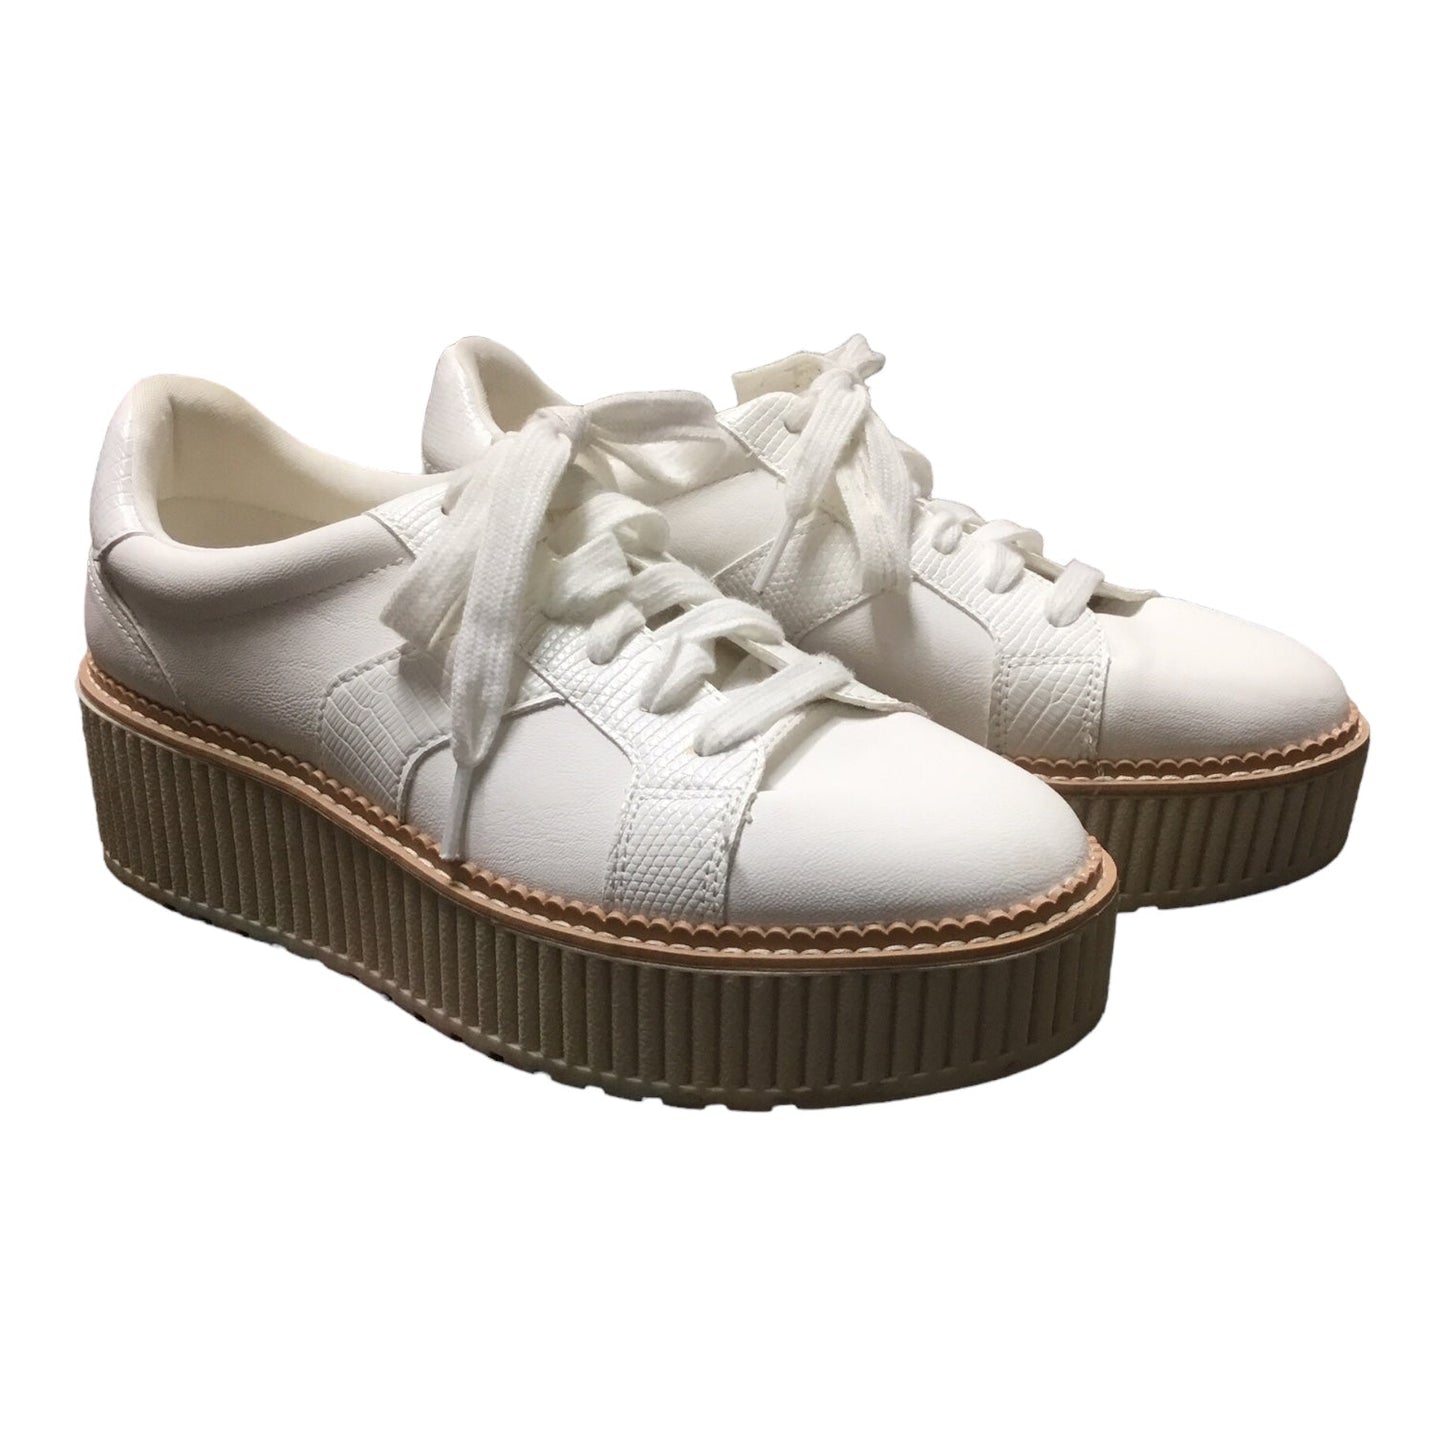 White Shoes Heels Platform Dolce Vita, Size 8.5